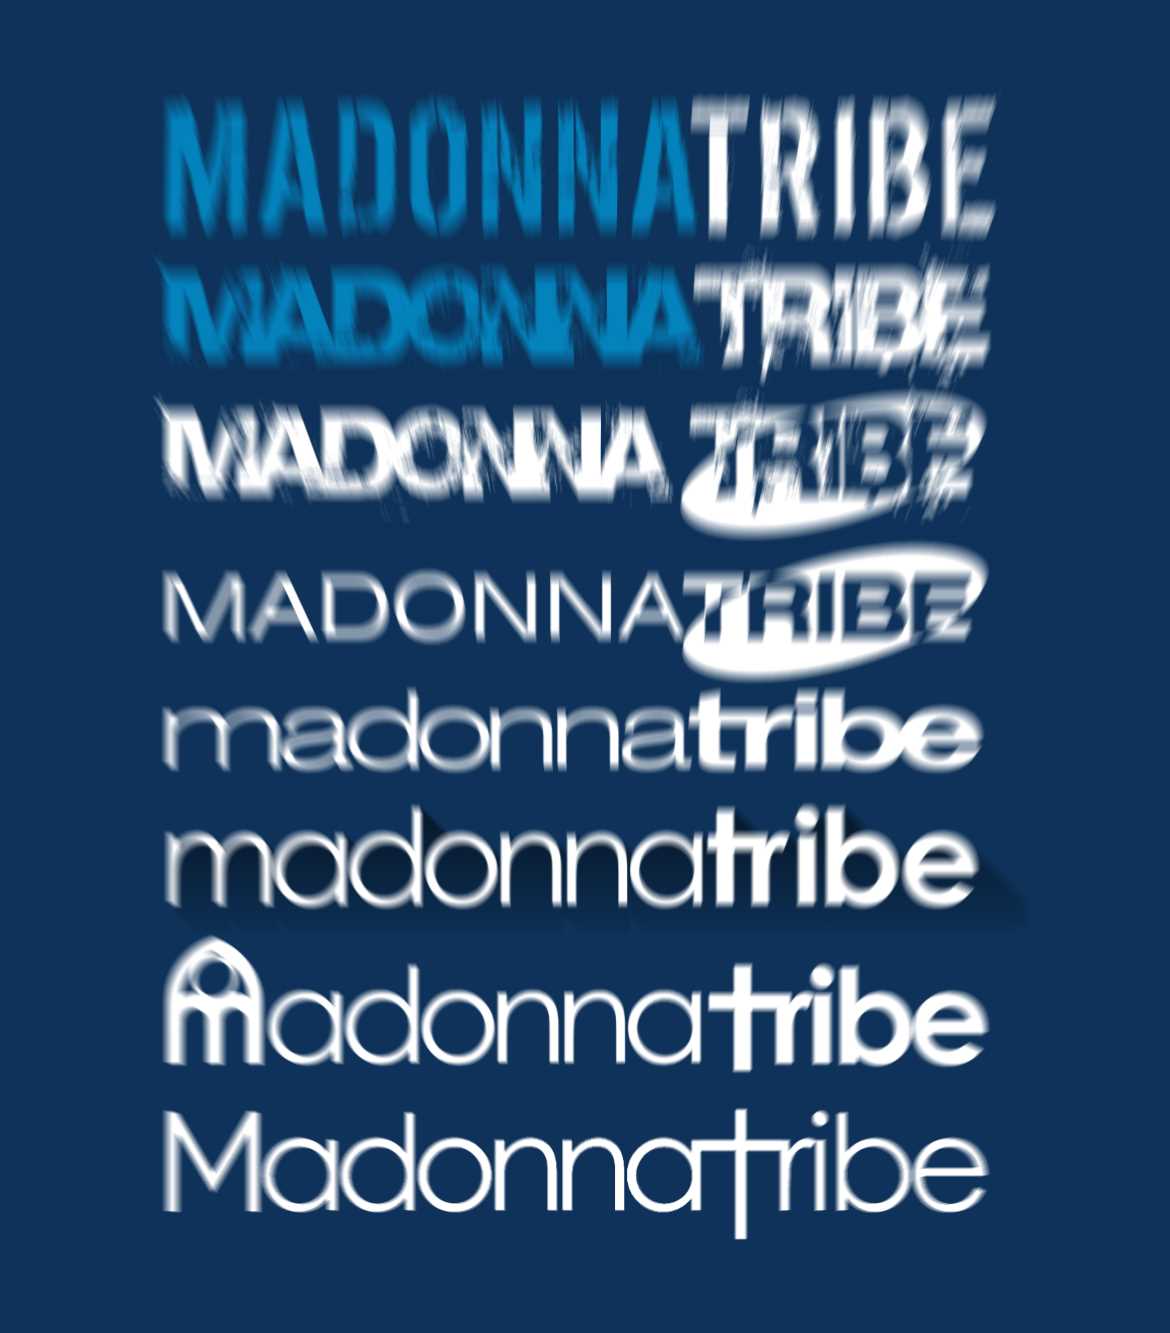 MadonnaTribe Logo History